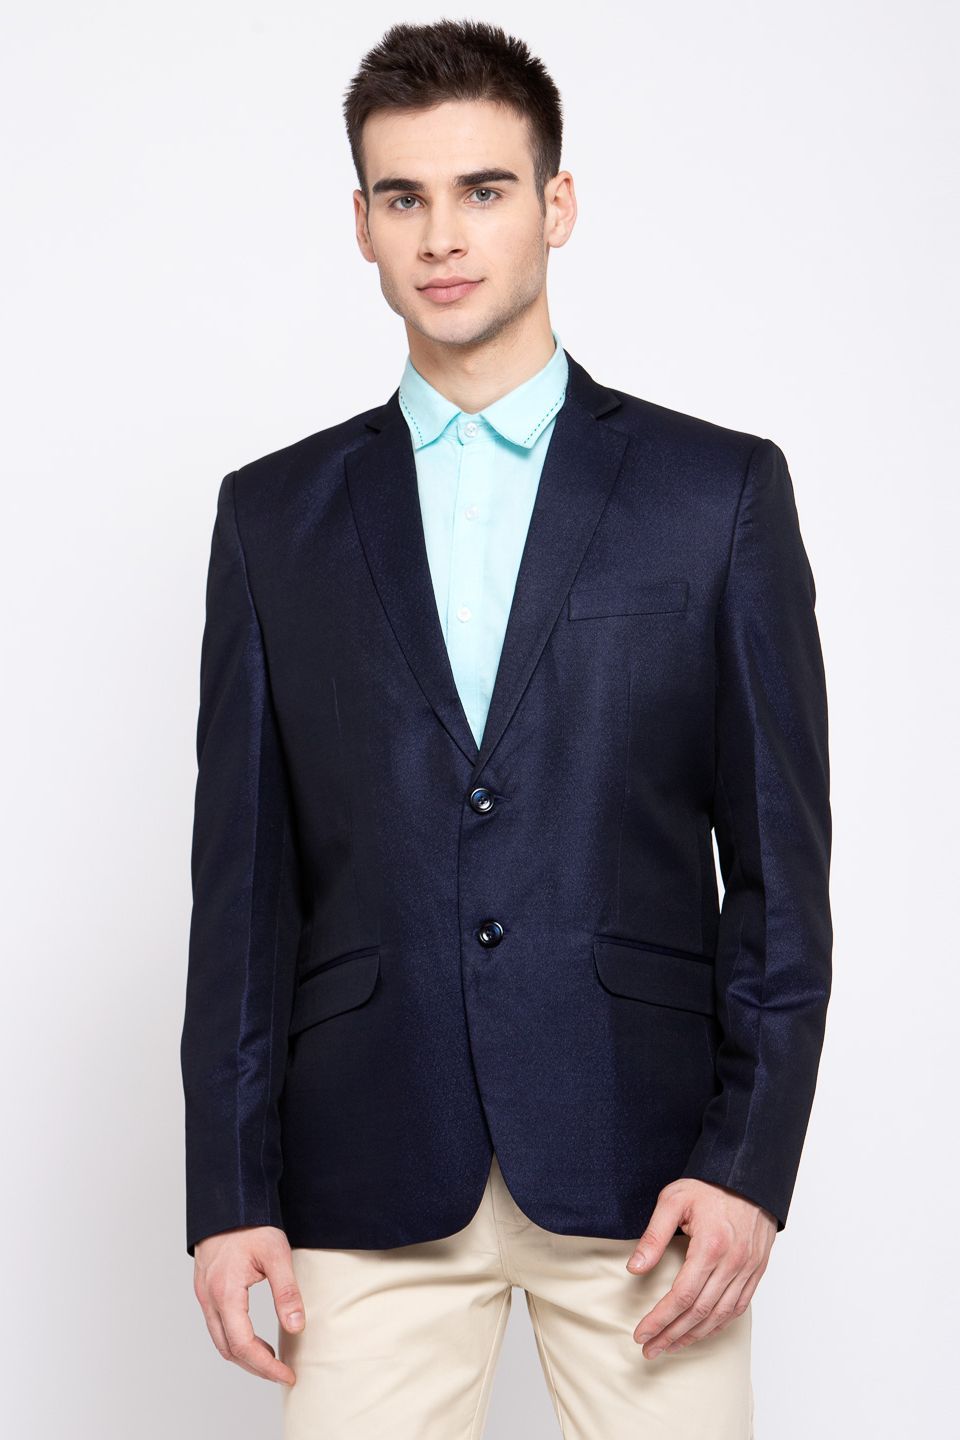 Wintage Men's Poly Blend Formal and Evening Blazer Coat Jacket : Navy Blue